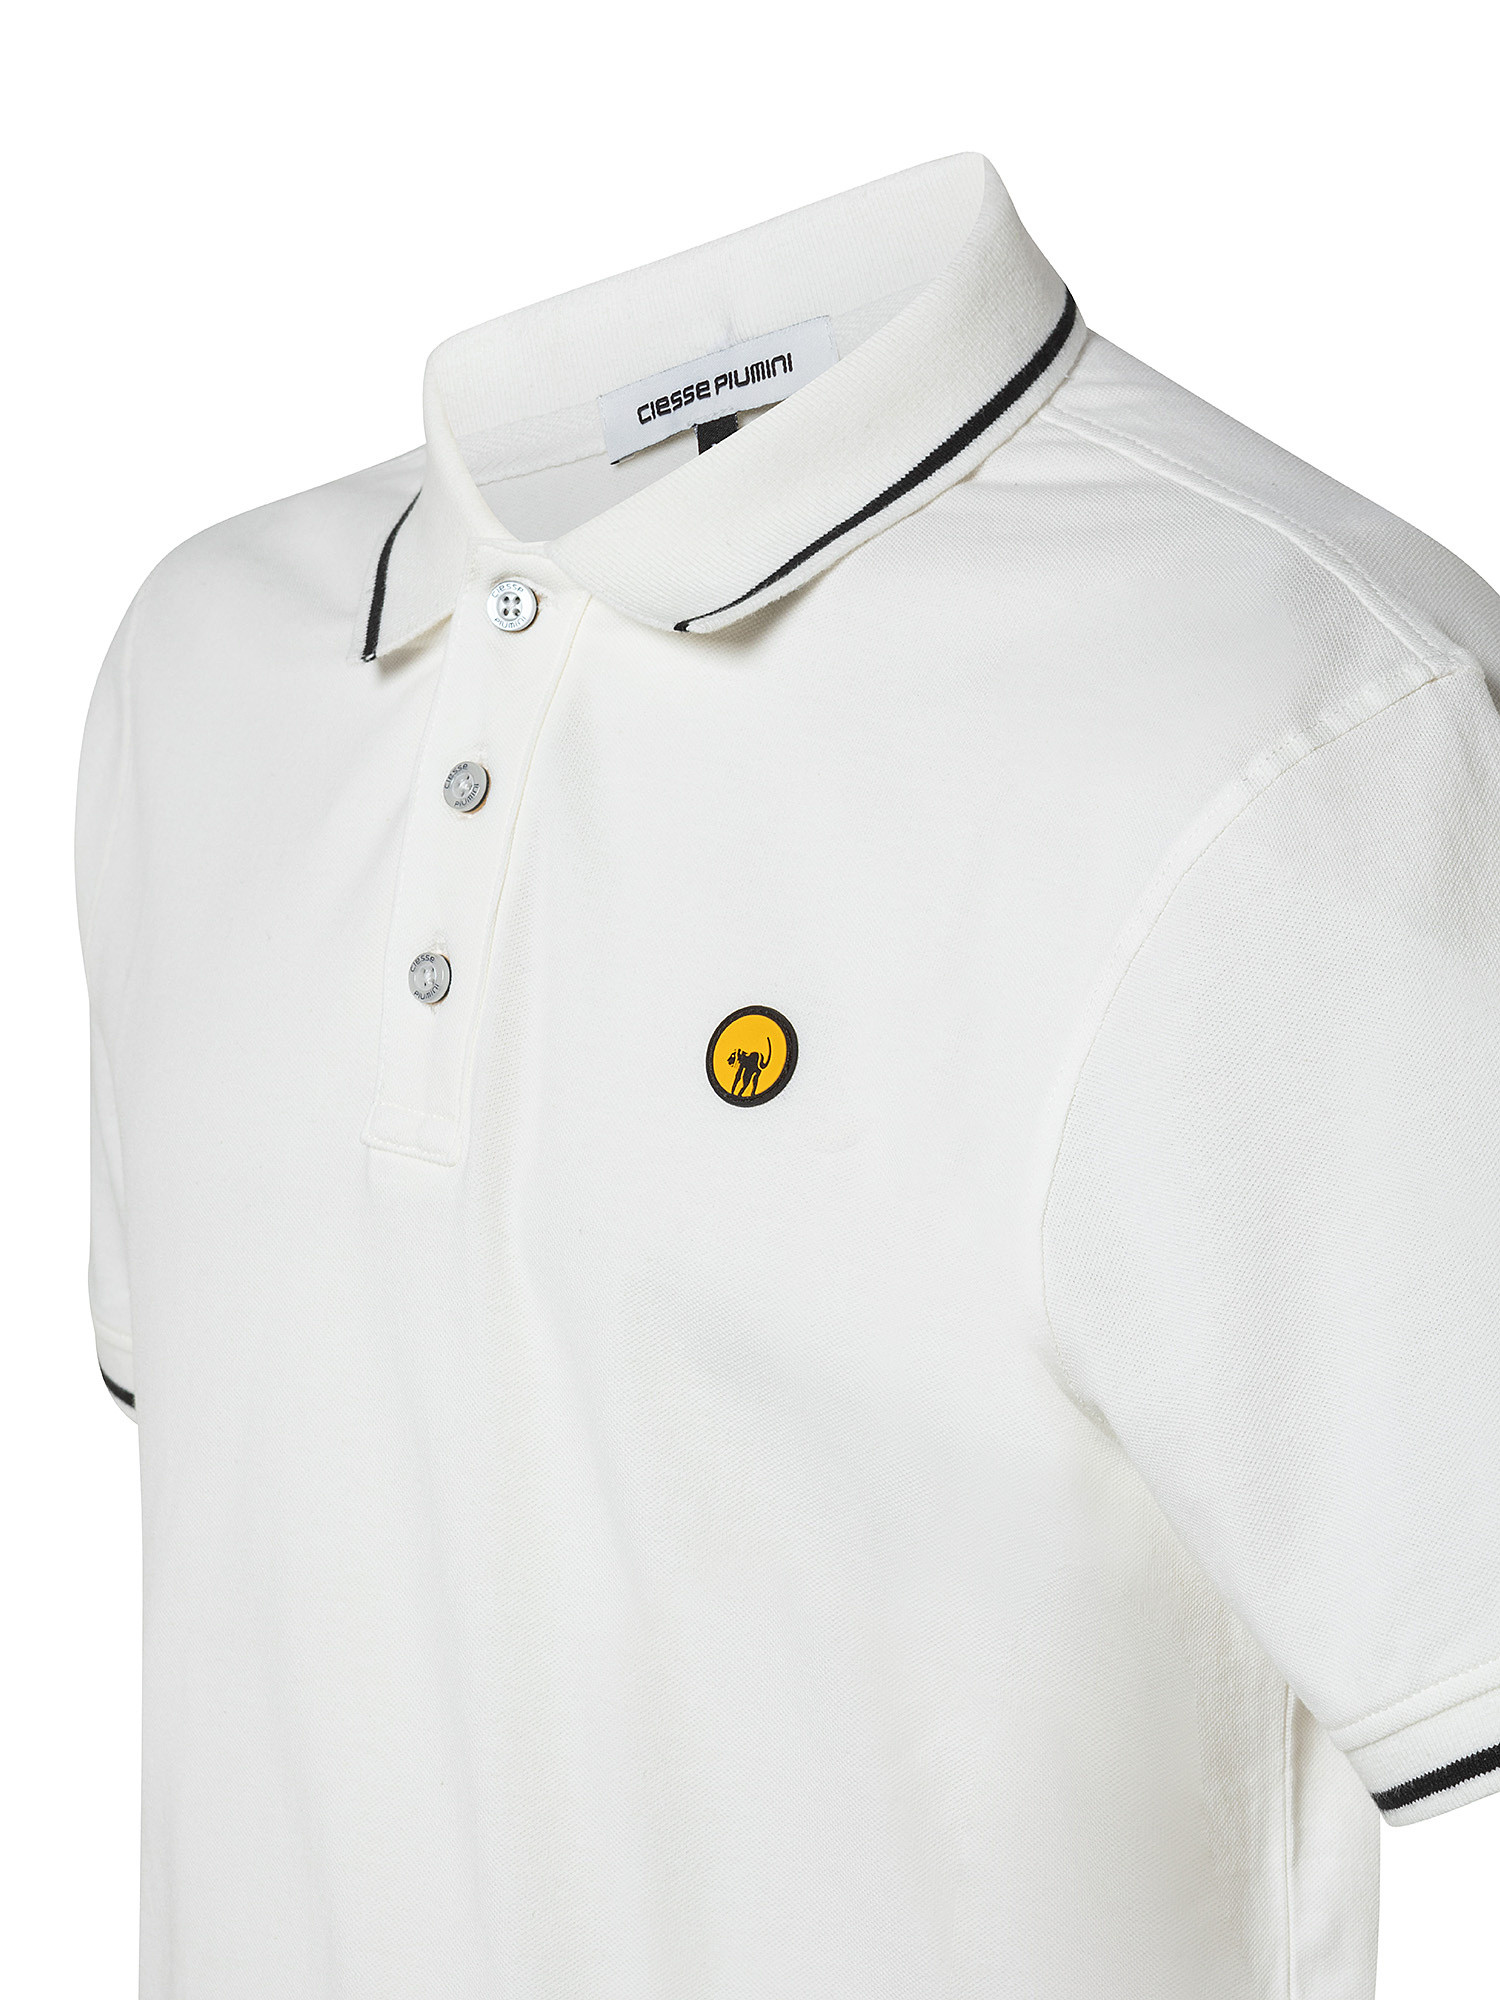 Polo shirt, White, large image number 2